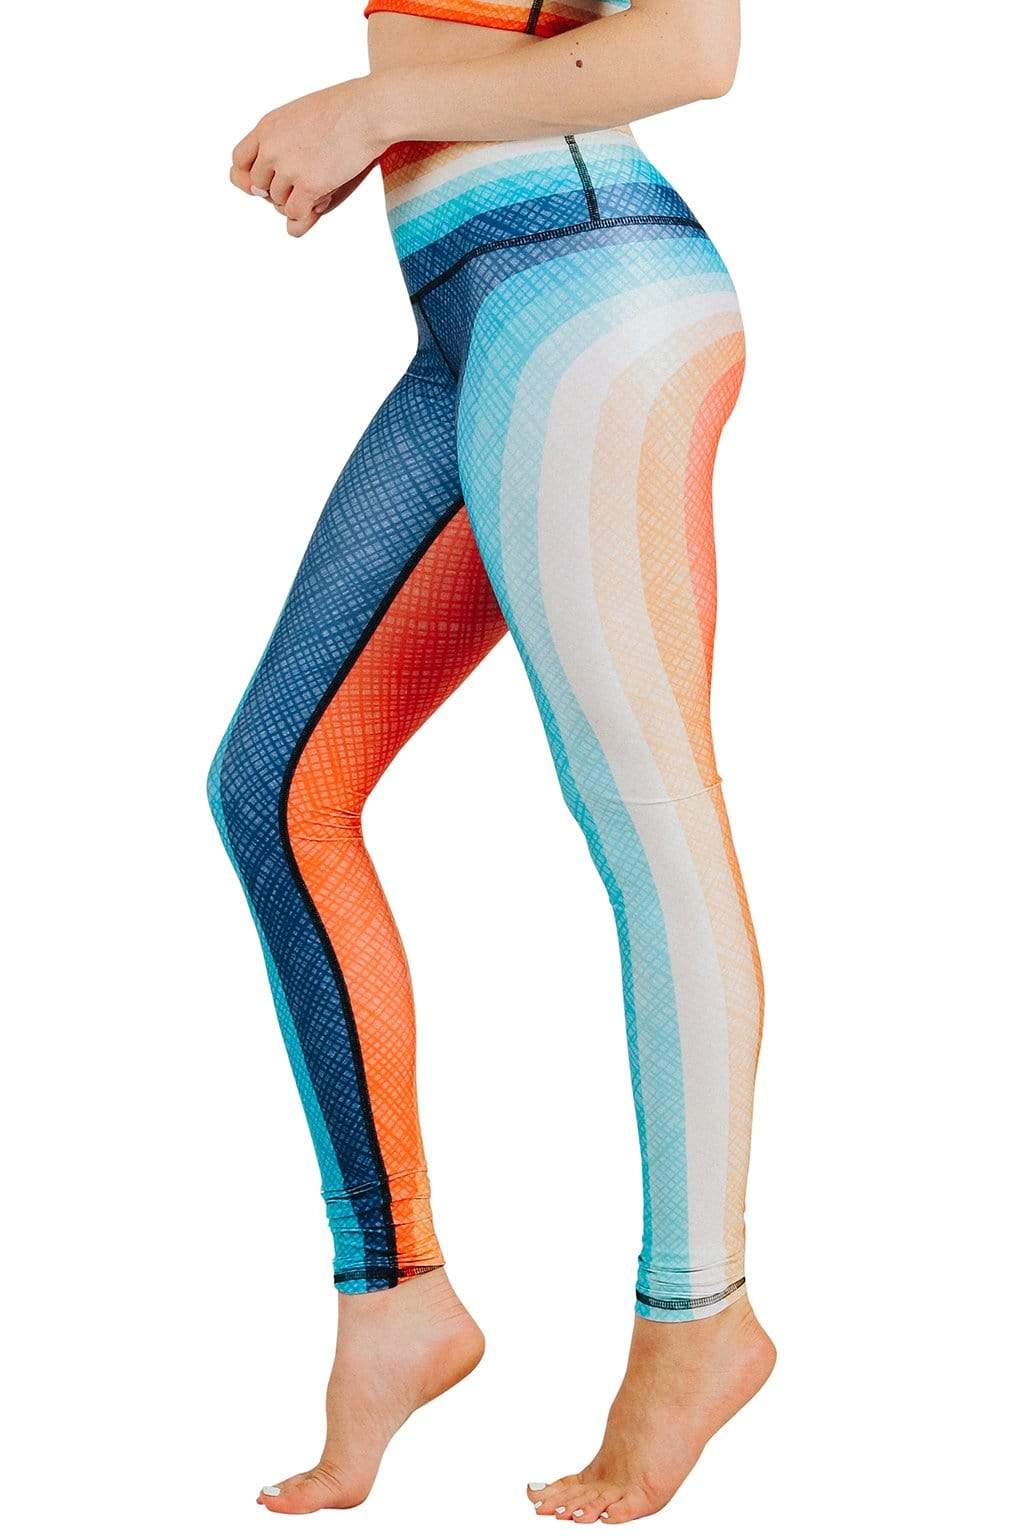 Retro Rainbow Eco-Friendly Women's Printed Yoga Leggings